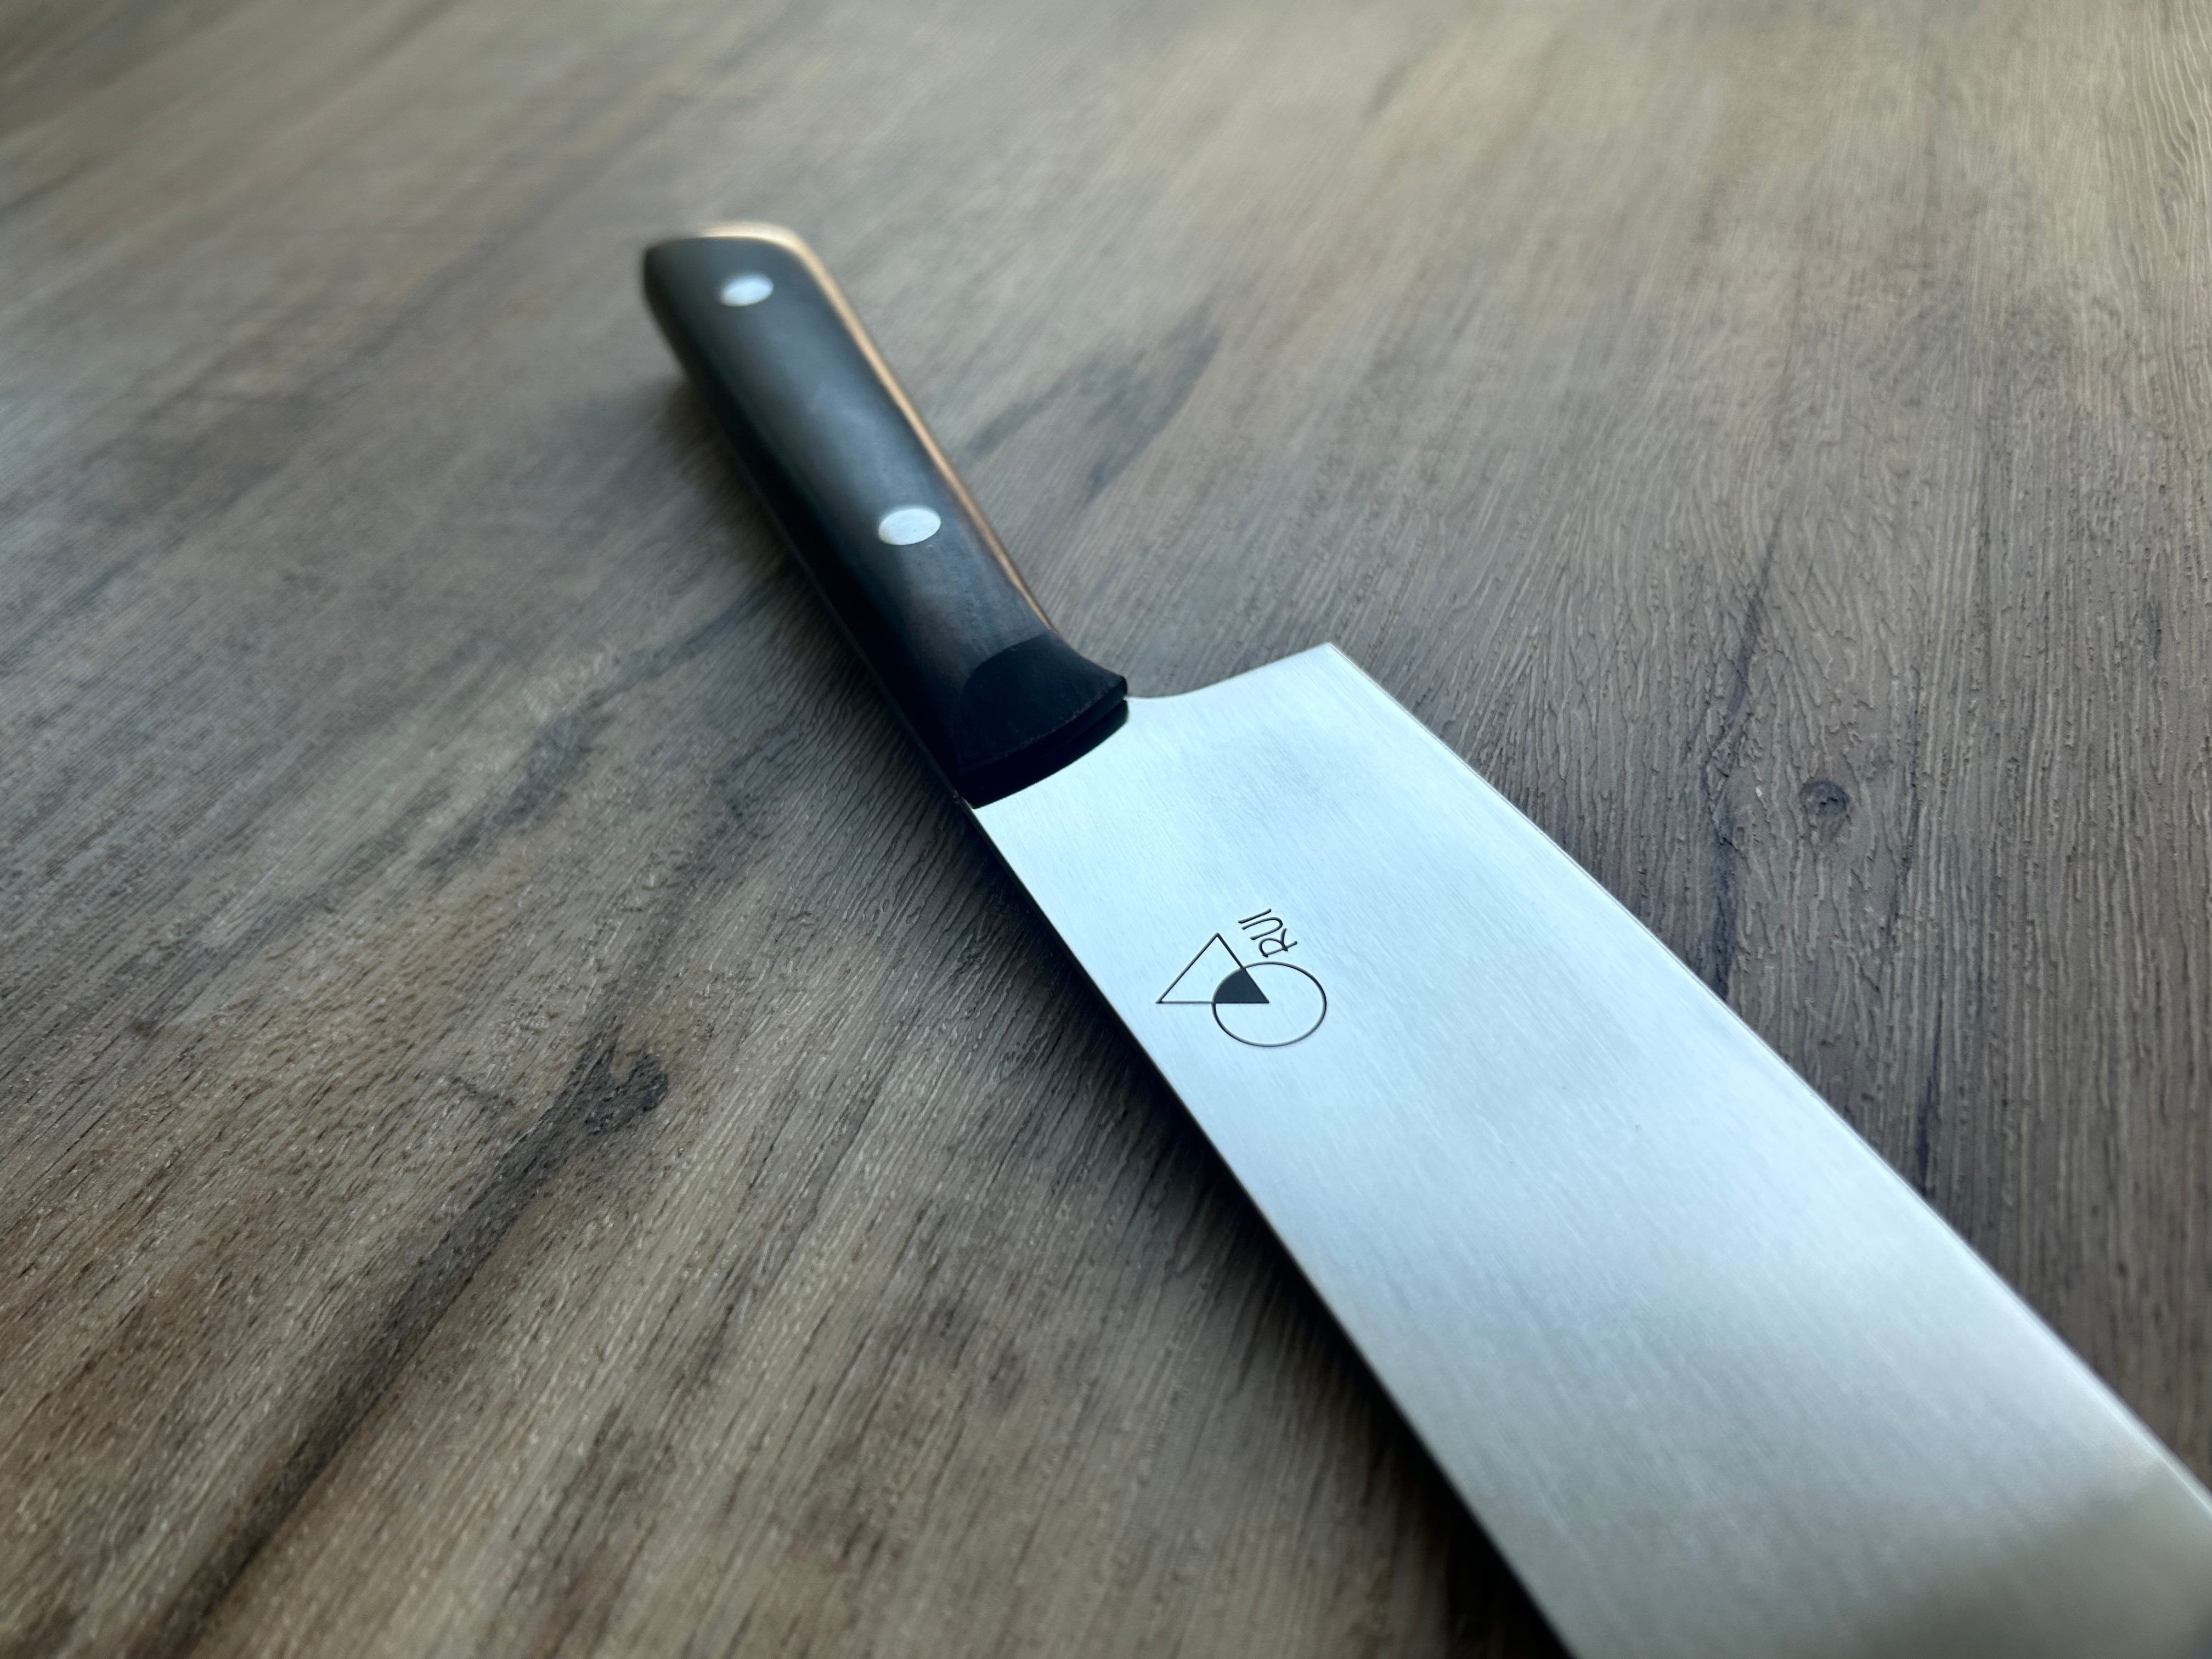 "CURVE" Molybdenum/Vanadium Best All Purpose Advanced Kitchen Knife RUI has made FREE SHIPPING